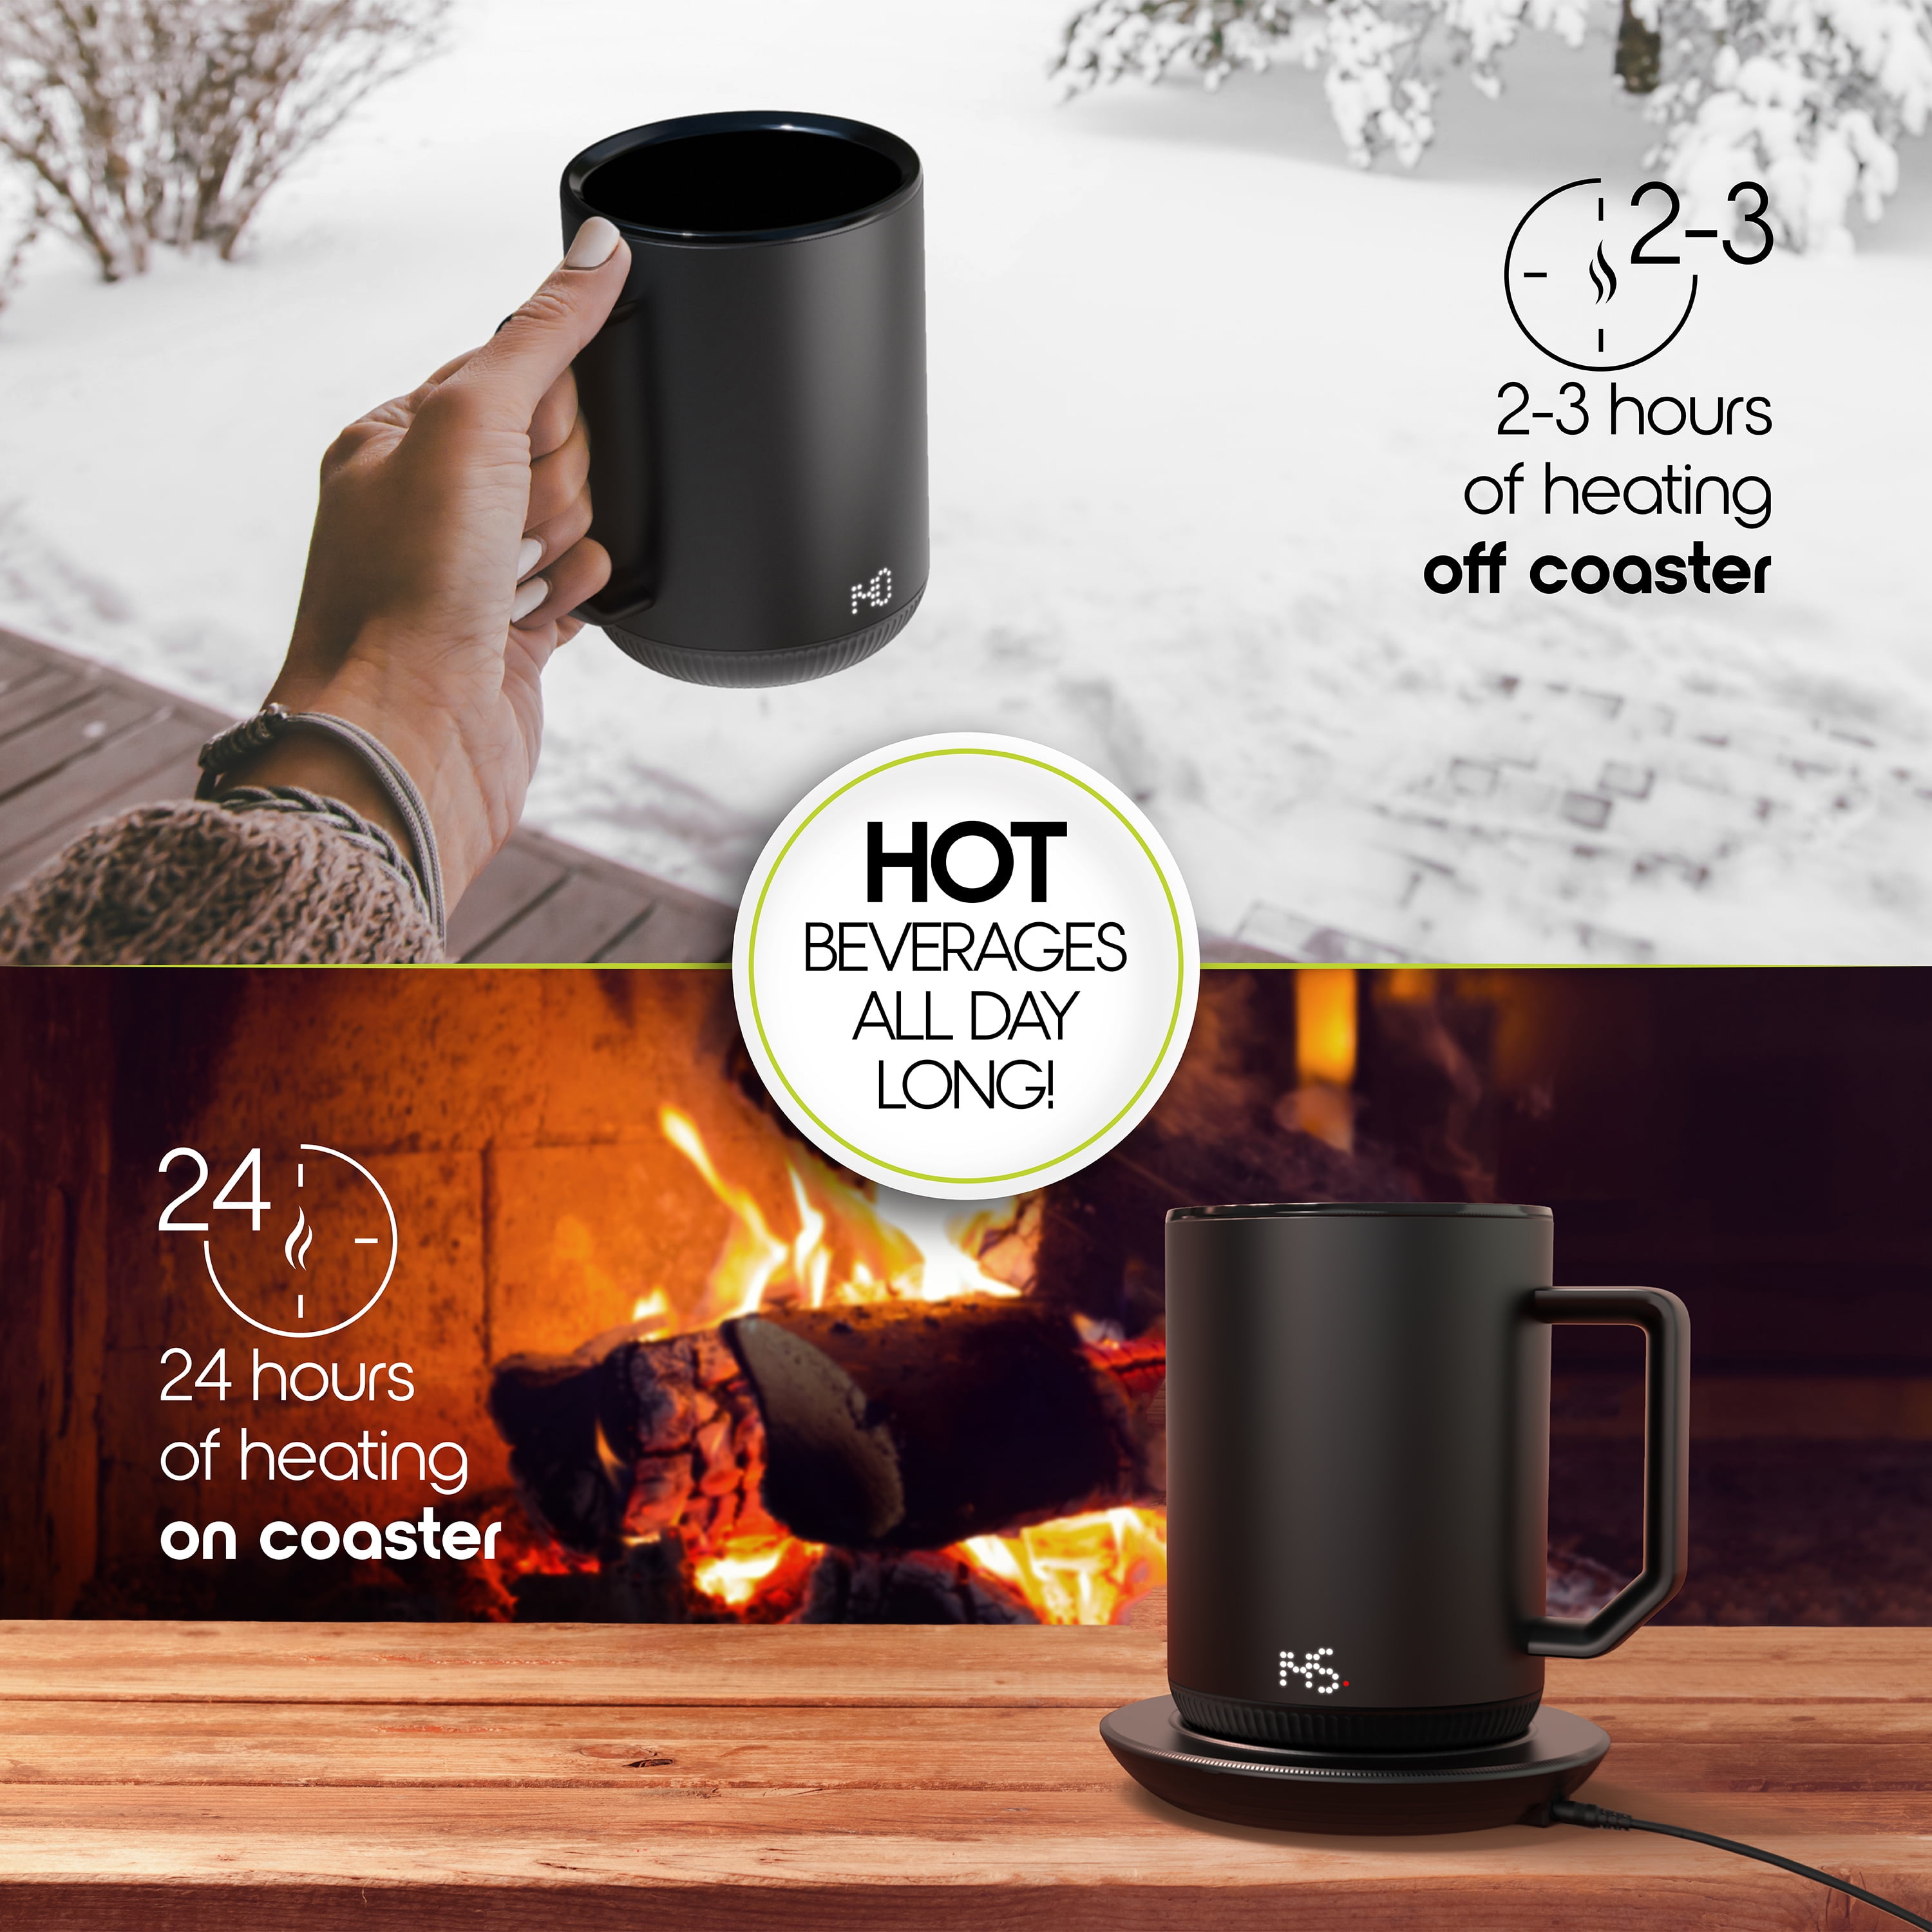 Ceramic Mug With Warmer And Phone Charging Coaster - New!